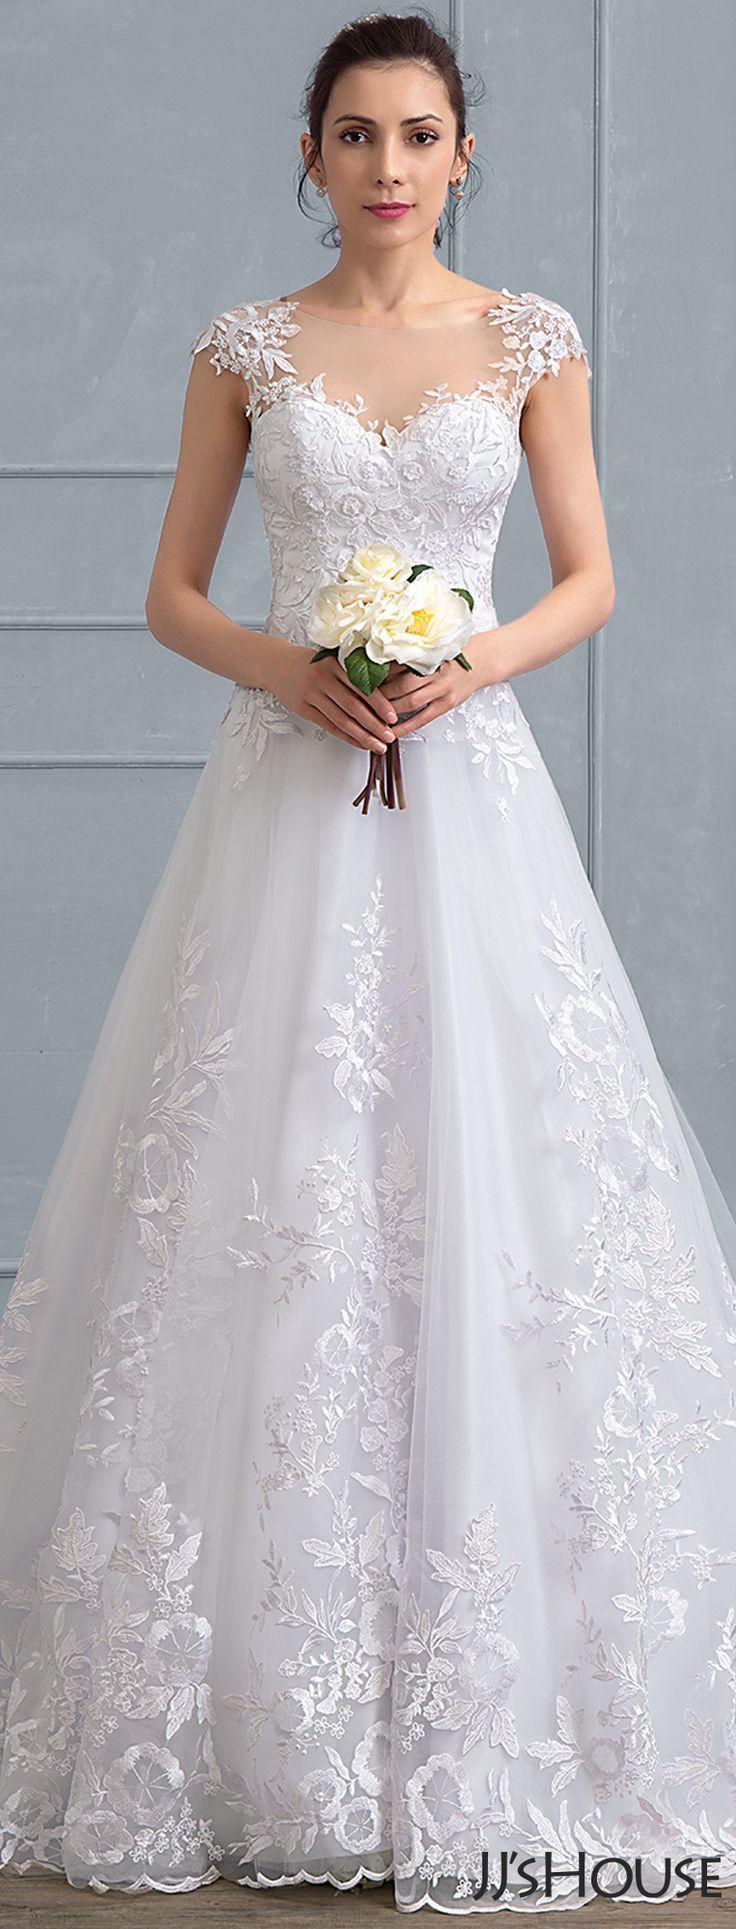 Wedding - A-Line/Princess Scoop Neck Court Train Tulle Lace Wedding Dress (002111937)